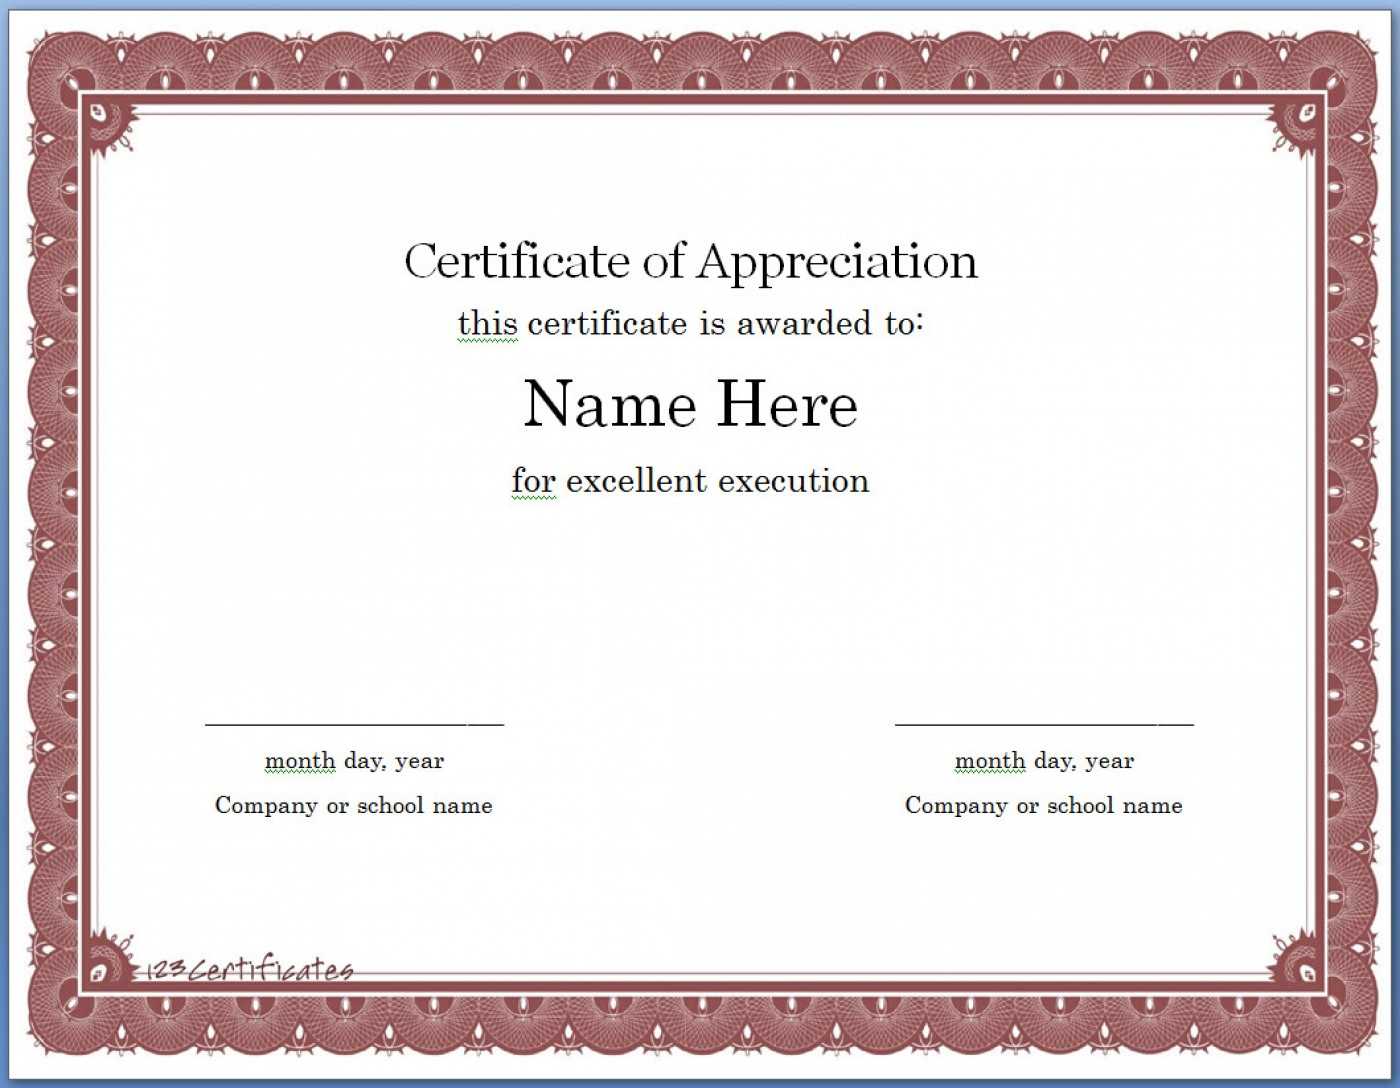 025 Template Ideas Certificate Of Appreciation Certificates Within Template For Certificate Of Appreciation In Microsoft Word